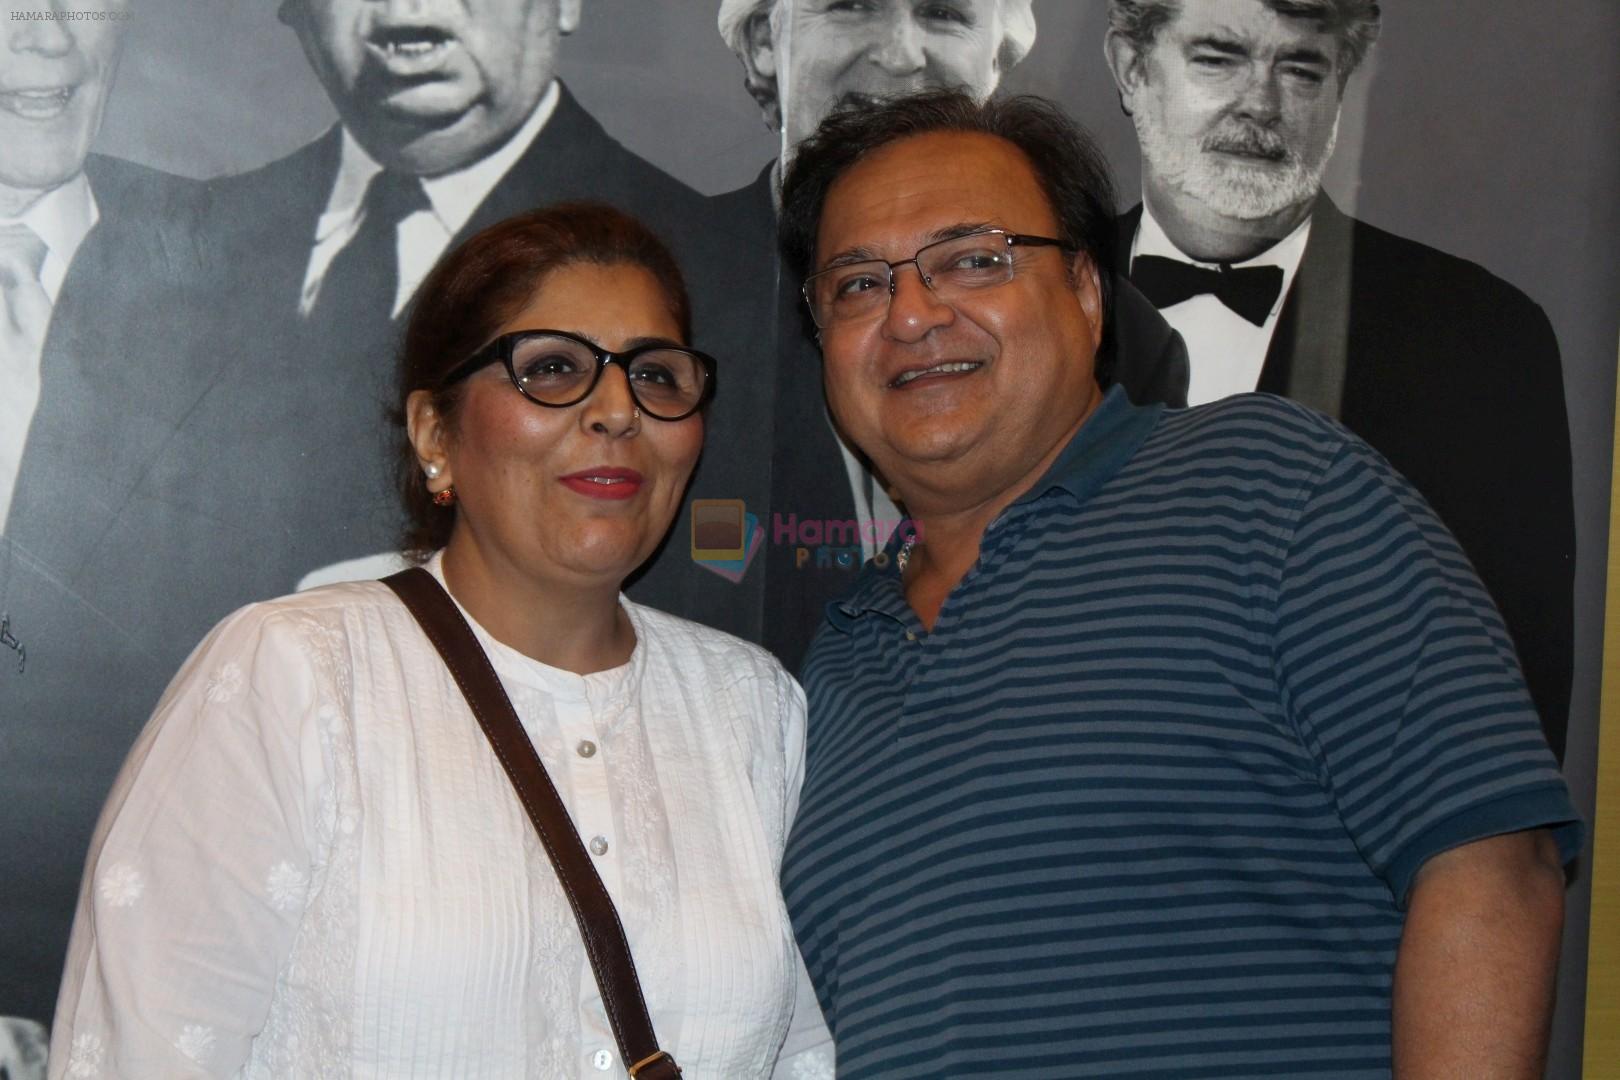 Rakesh Bedi at the premiere of film Jeena Isi Ka Naam Hai on 2nd March 2017